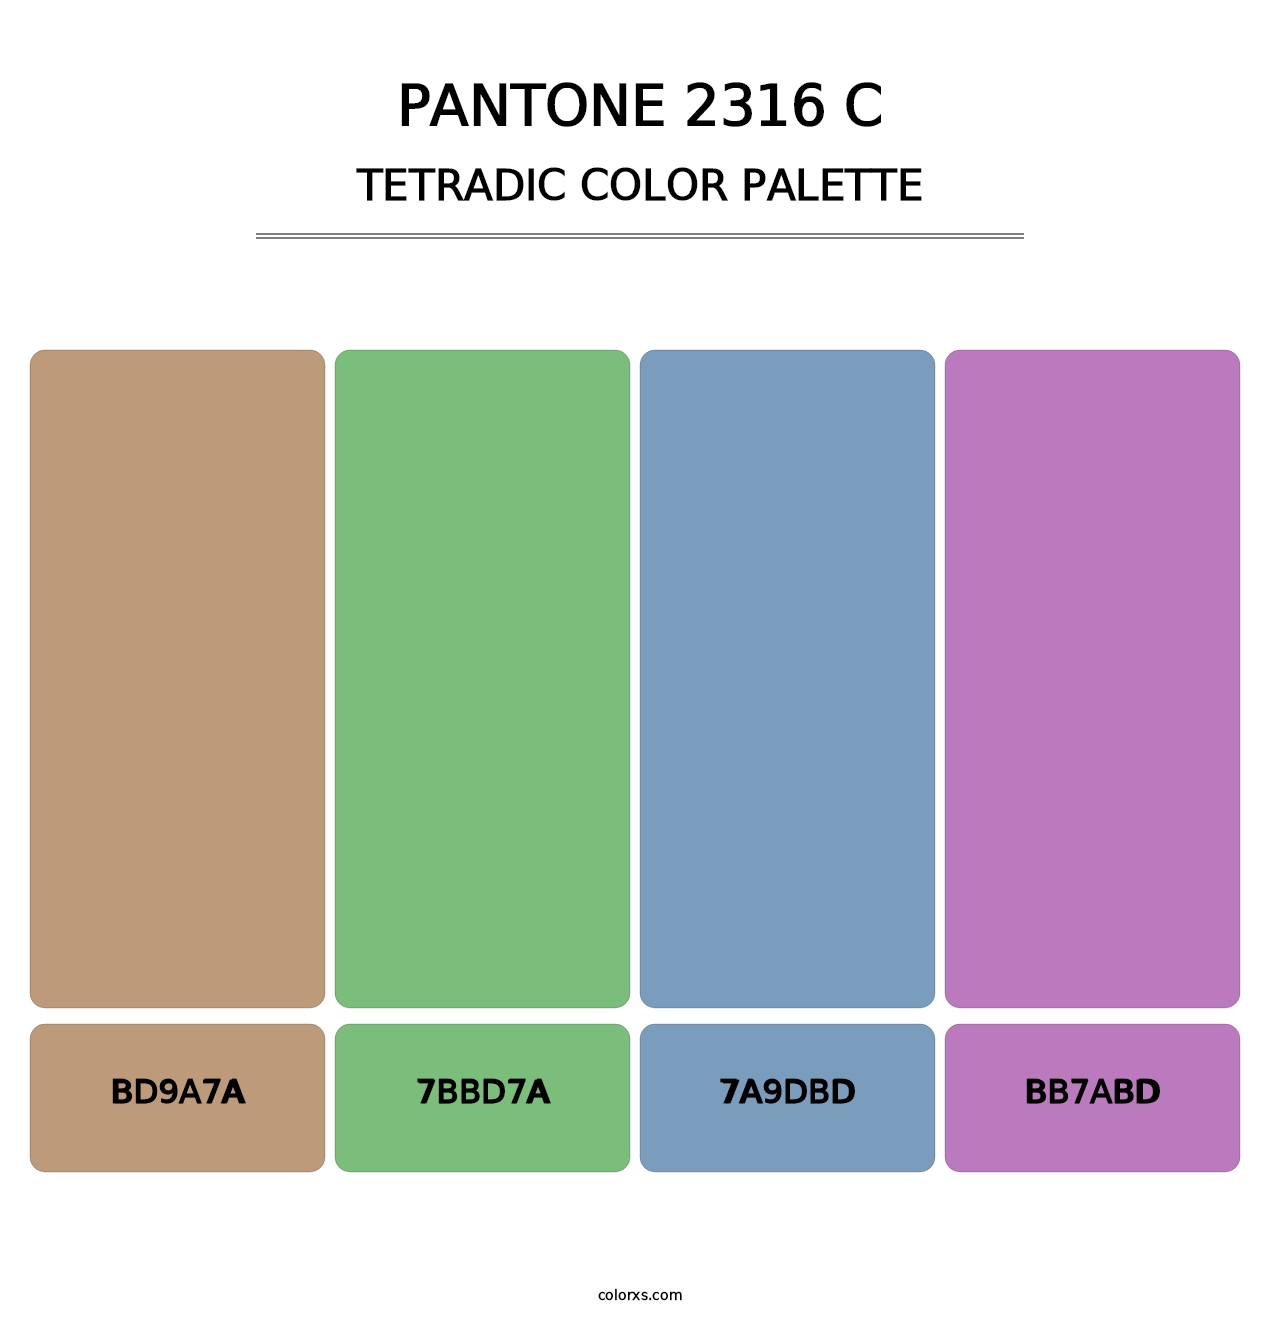 PANTONE 2316 C - Tetradic Color Palette